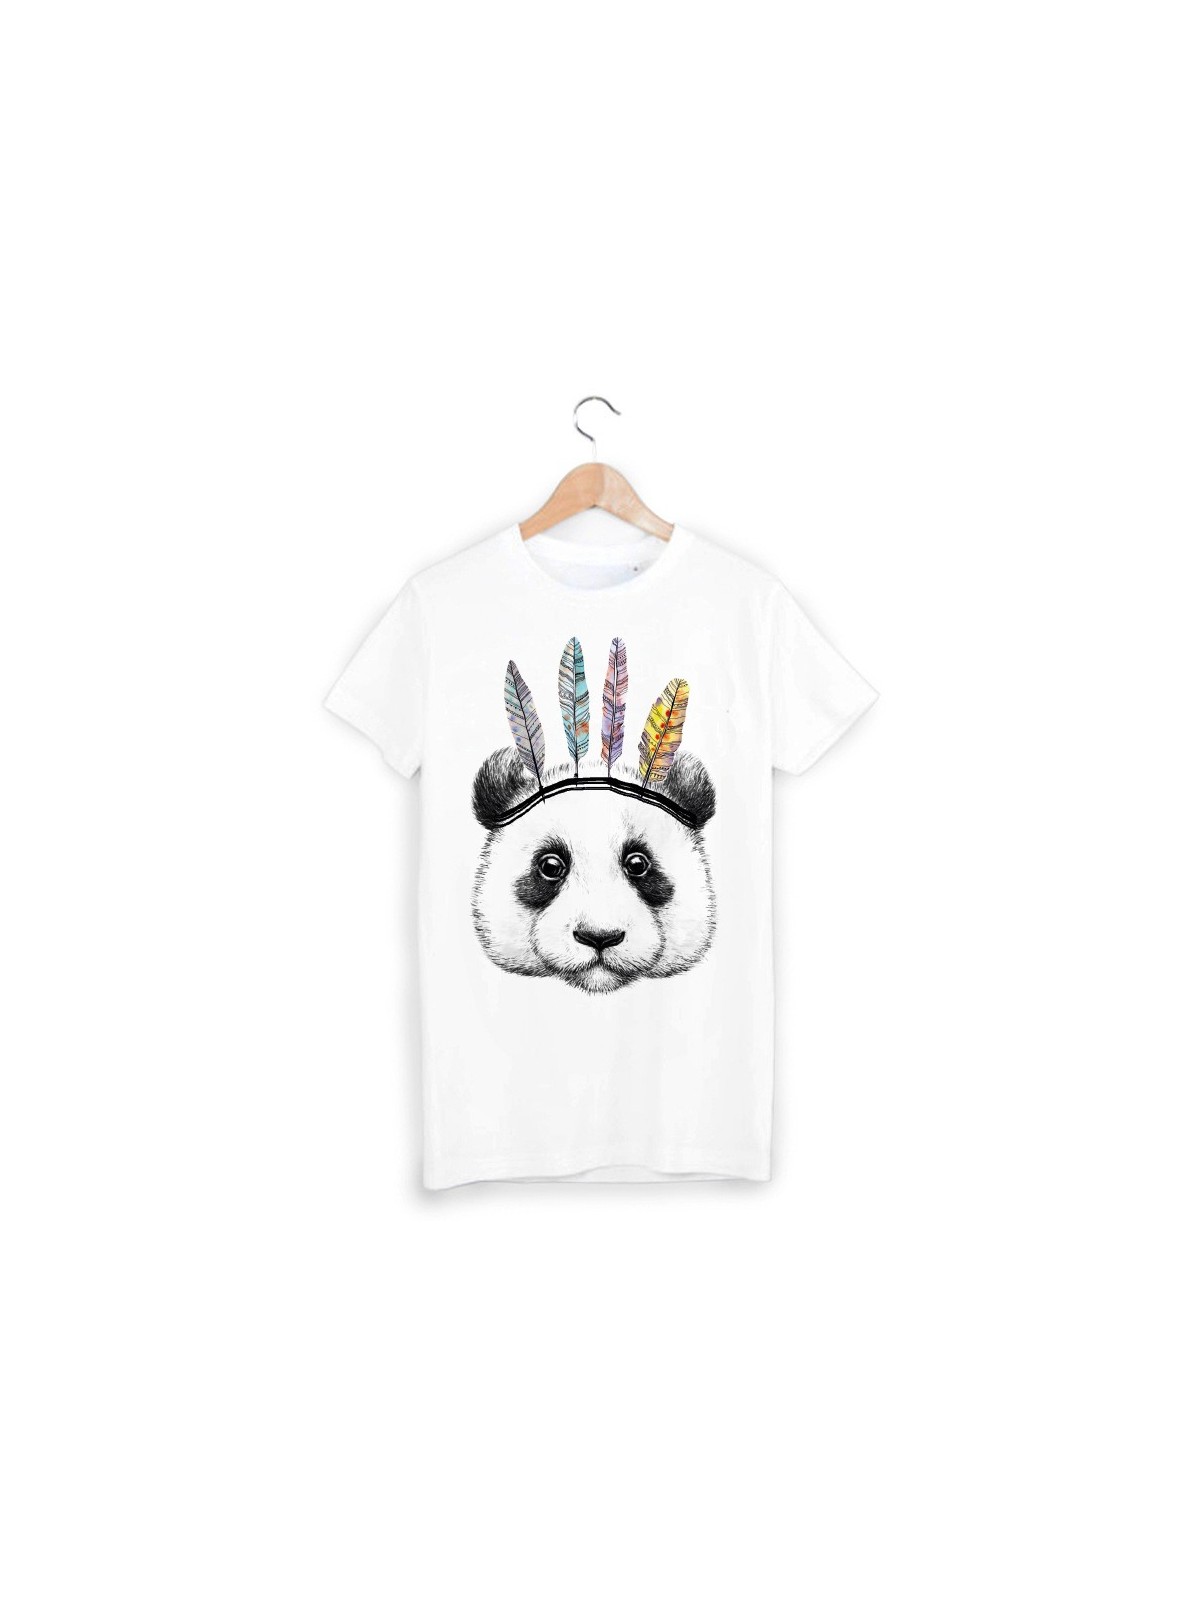 T-Shirt illustrÃ© panda indien ref 1538